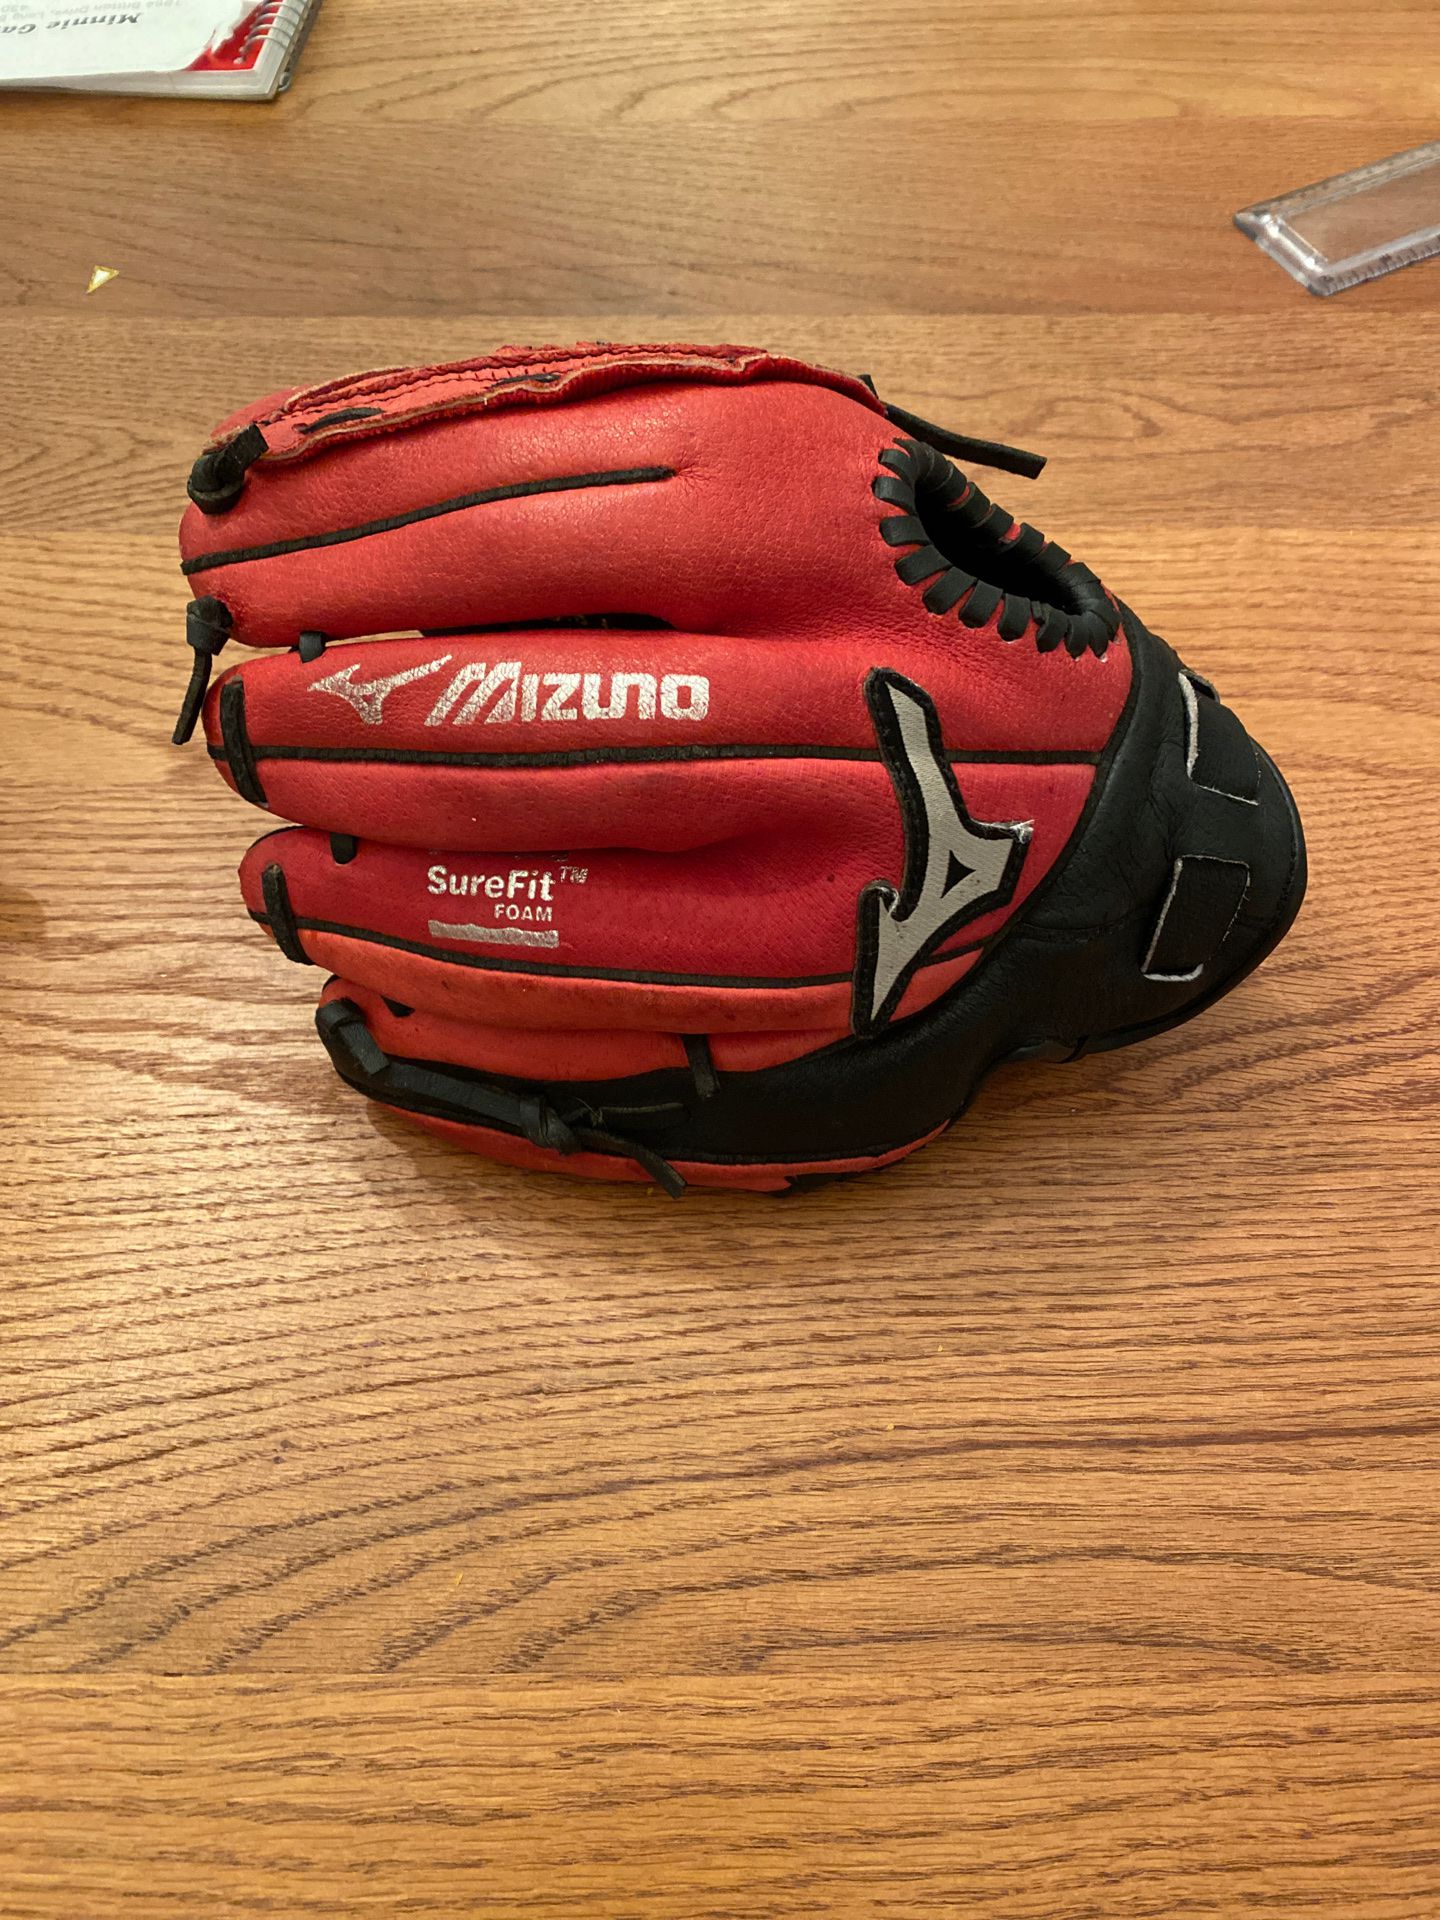 Mizuno softball/baseball glove